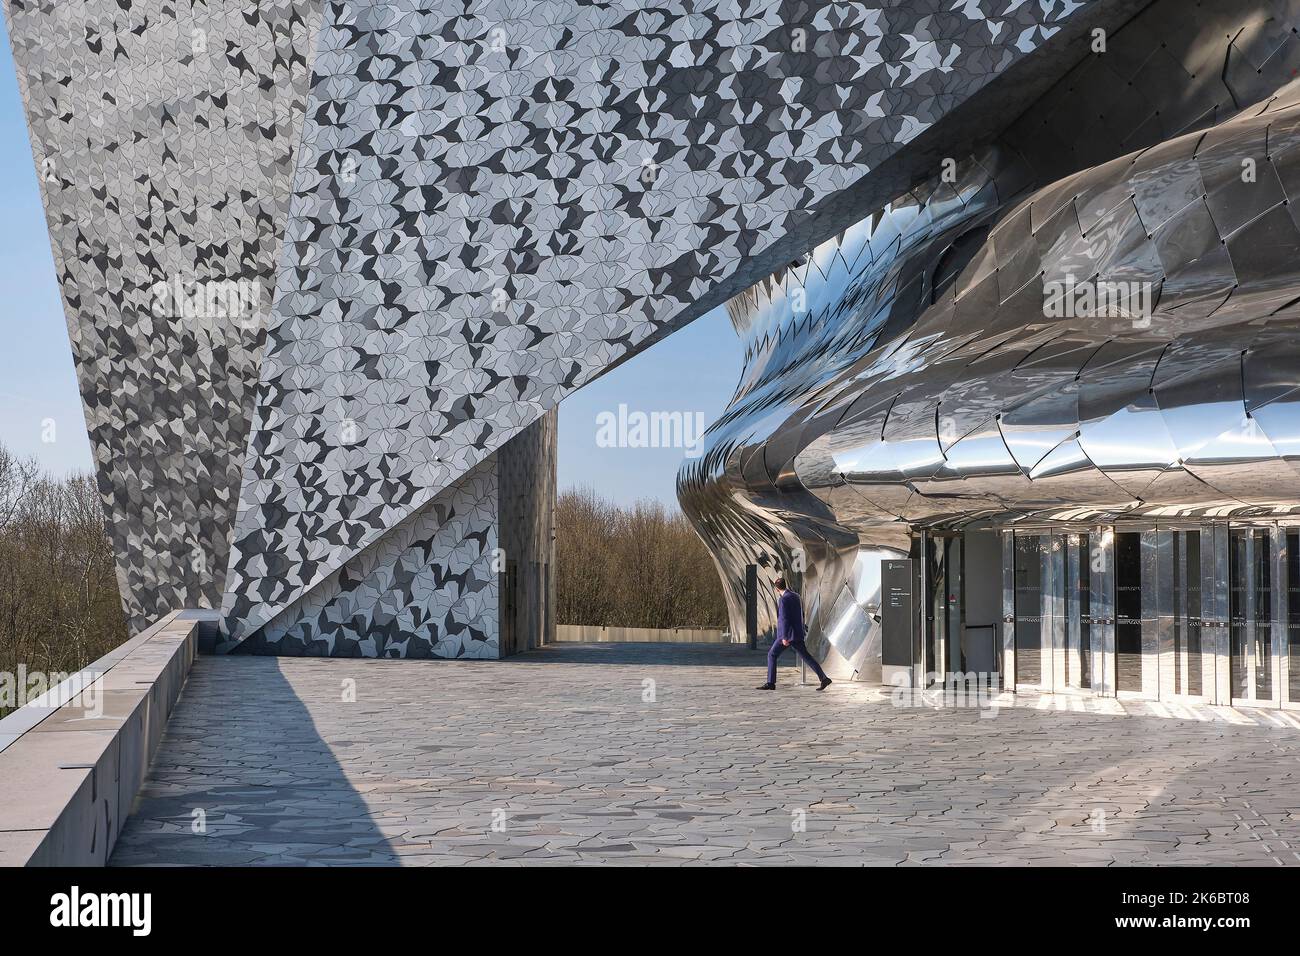 The symphonic concert hall designed by architect Jean Nouvel and Brigitte Metra in the “Parc de la Villette” park. Editorial use only / mandatory ment Stock Photo